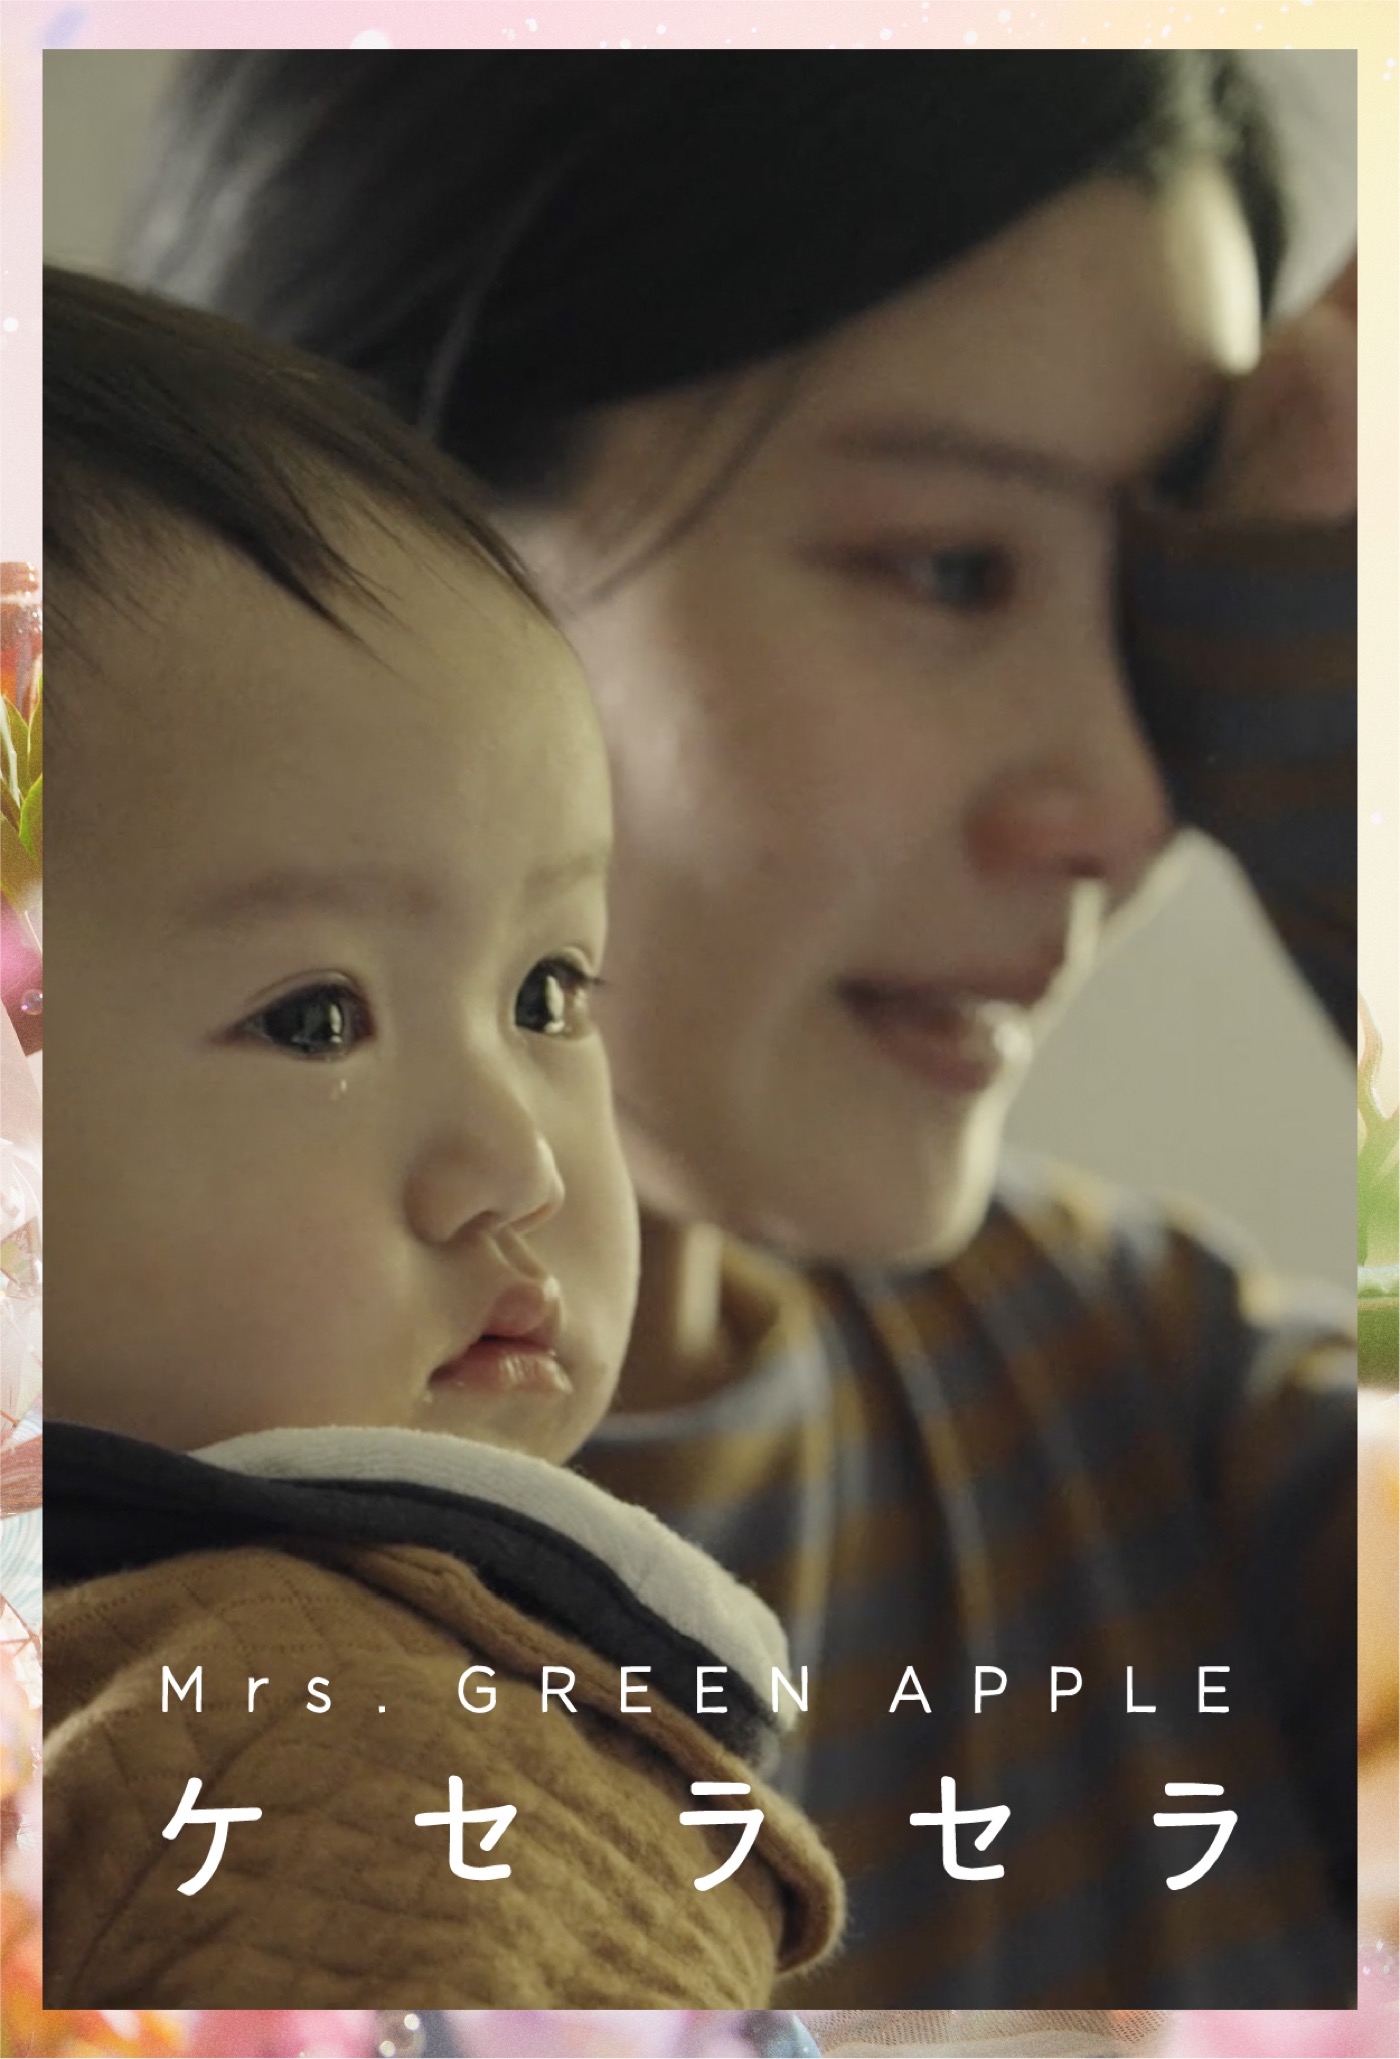 Mrs. GREEN APPLE、ドラマ『日曜の夜ぐらいは…』主題歌「ケセラセラ」MV Teaser Photo #1公開 - 画像一覧（2/2）